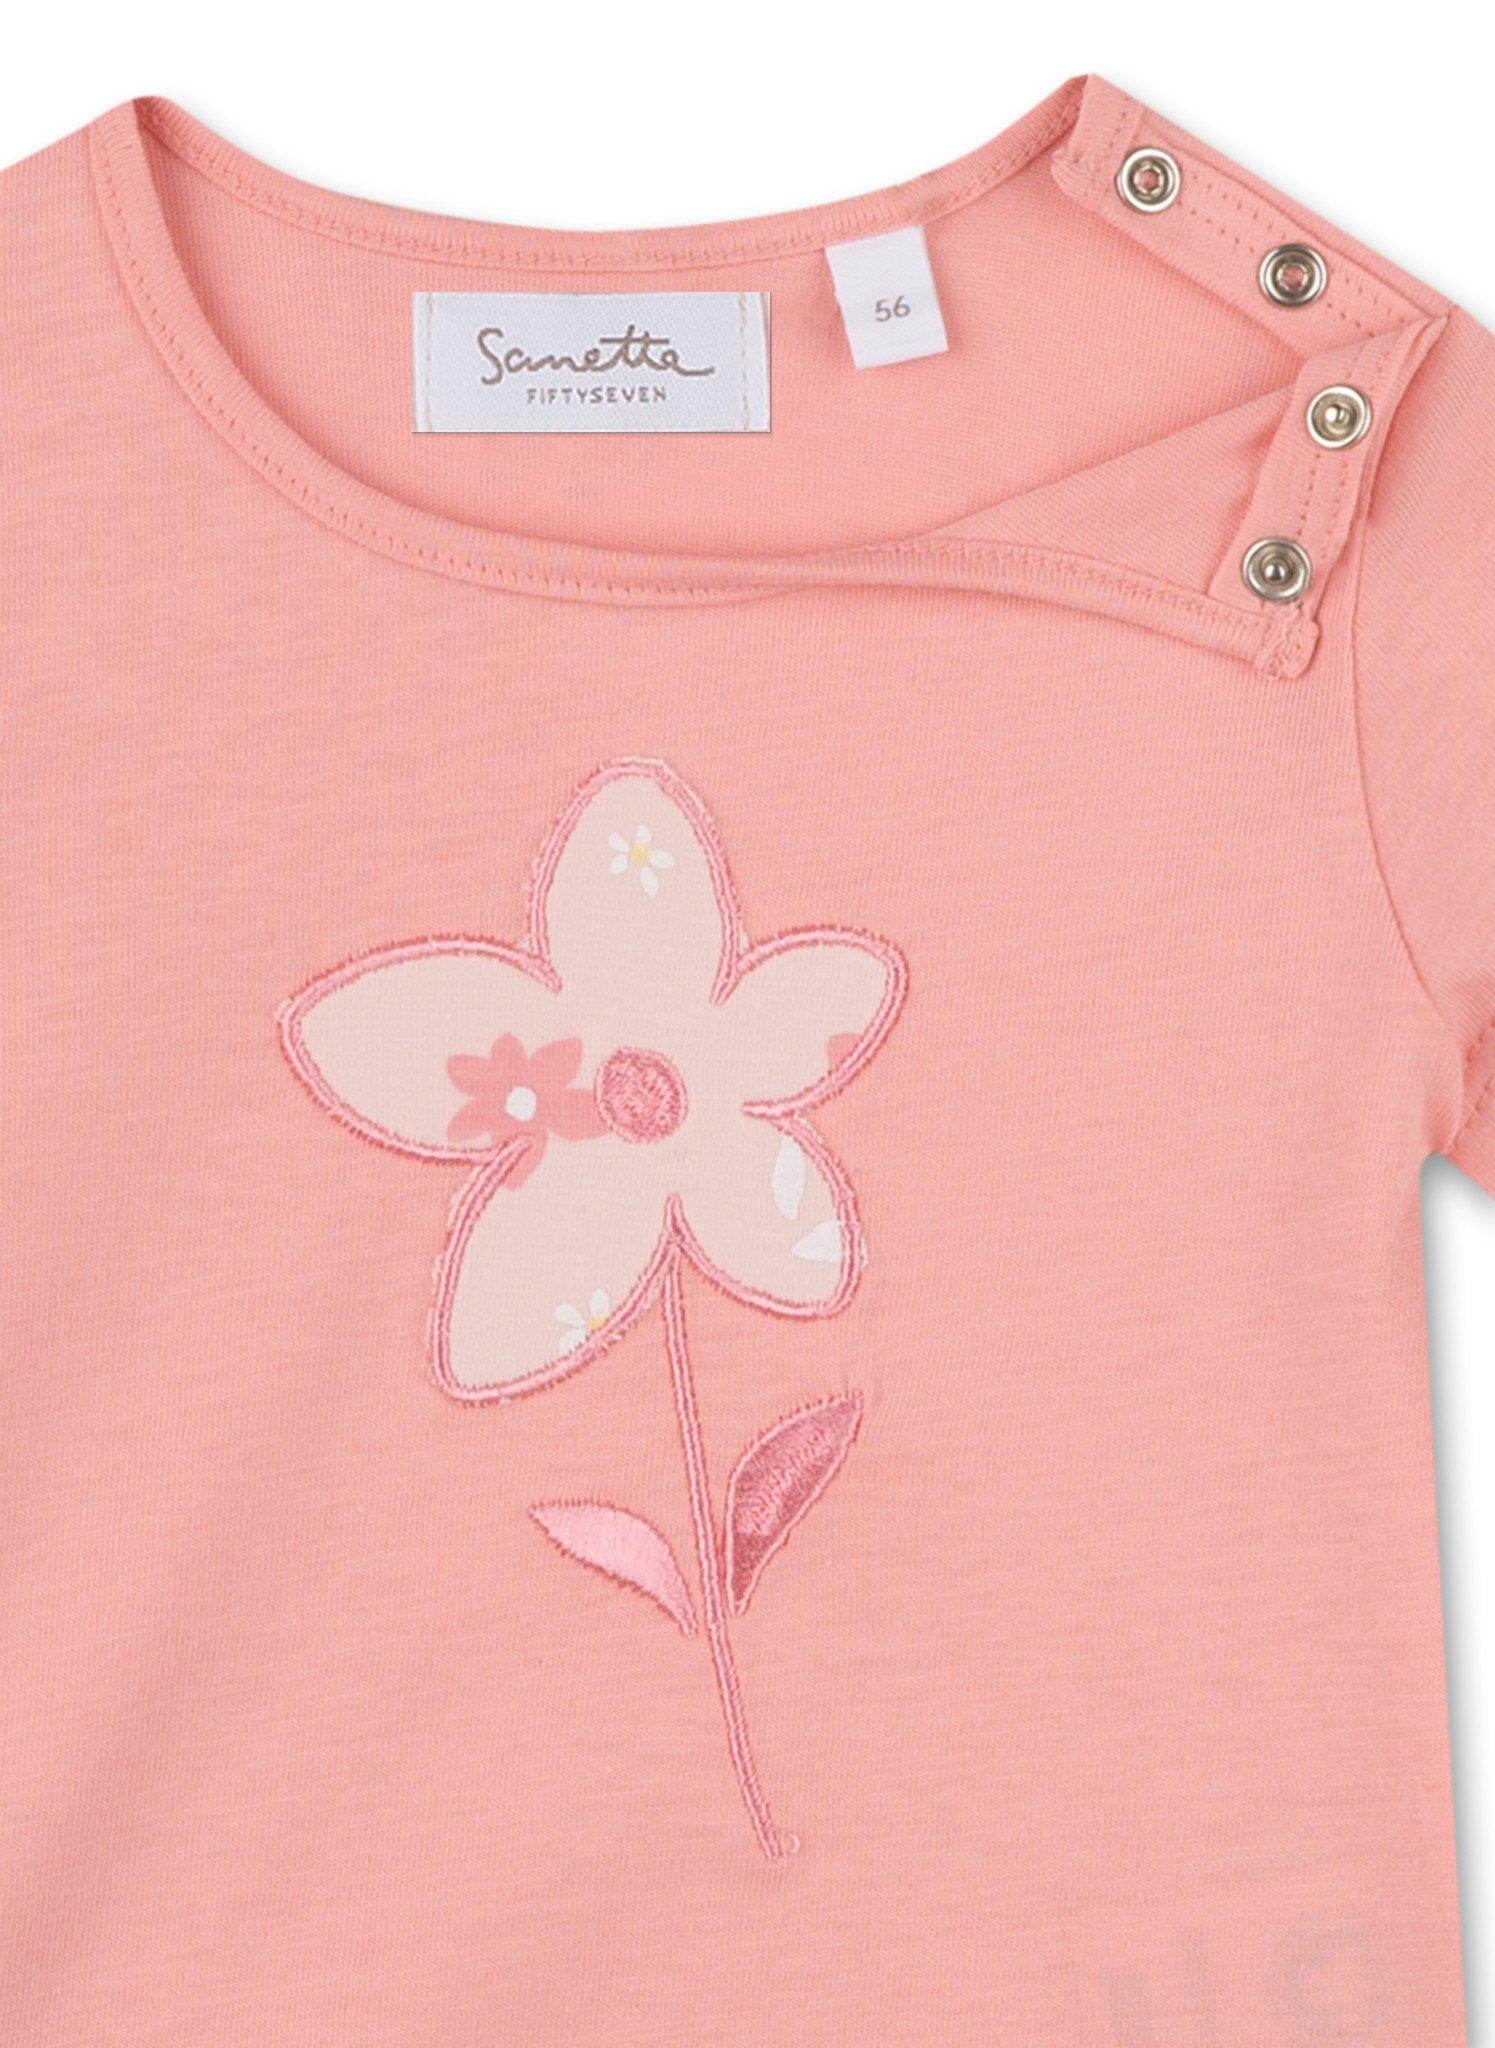 Sanetta Fiftyseven  Baby Mädchen T-Shirt Blume rosa 